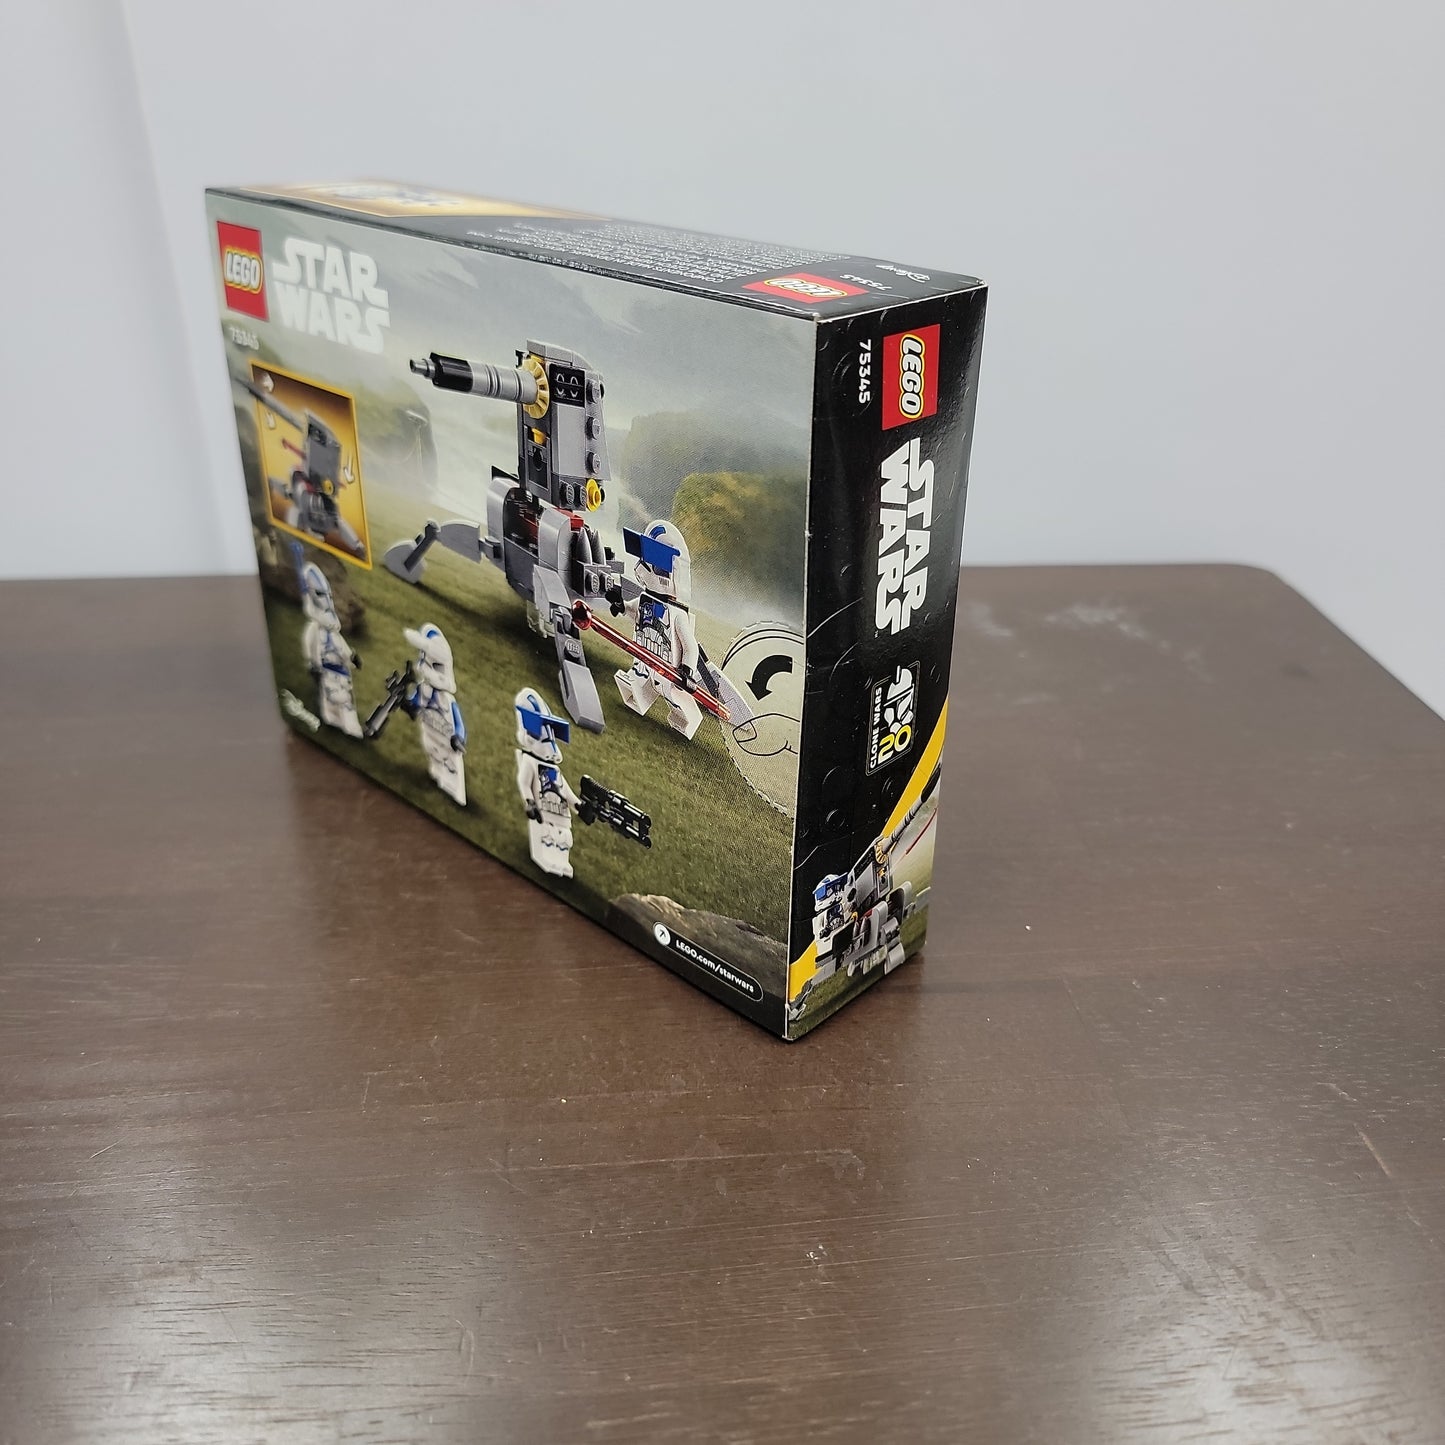 Star Wars 501st Clone Troopers Battle Pack Lego Set